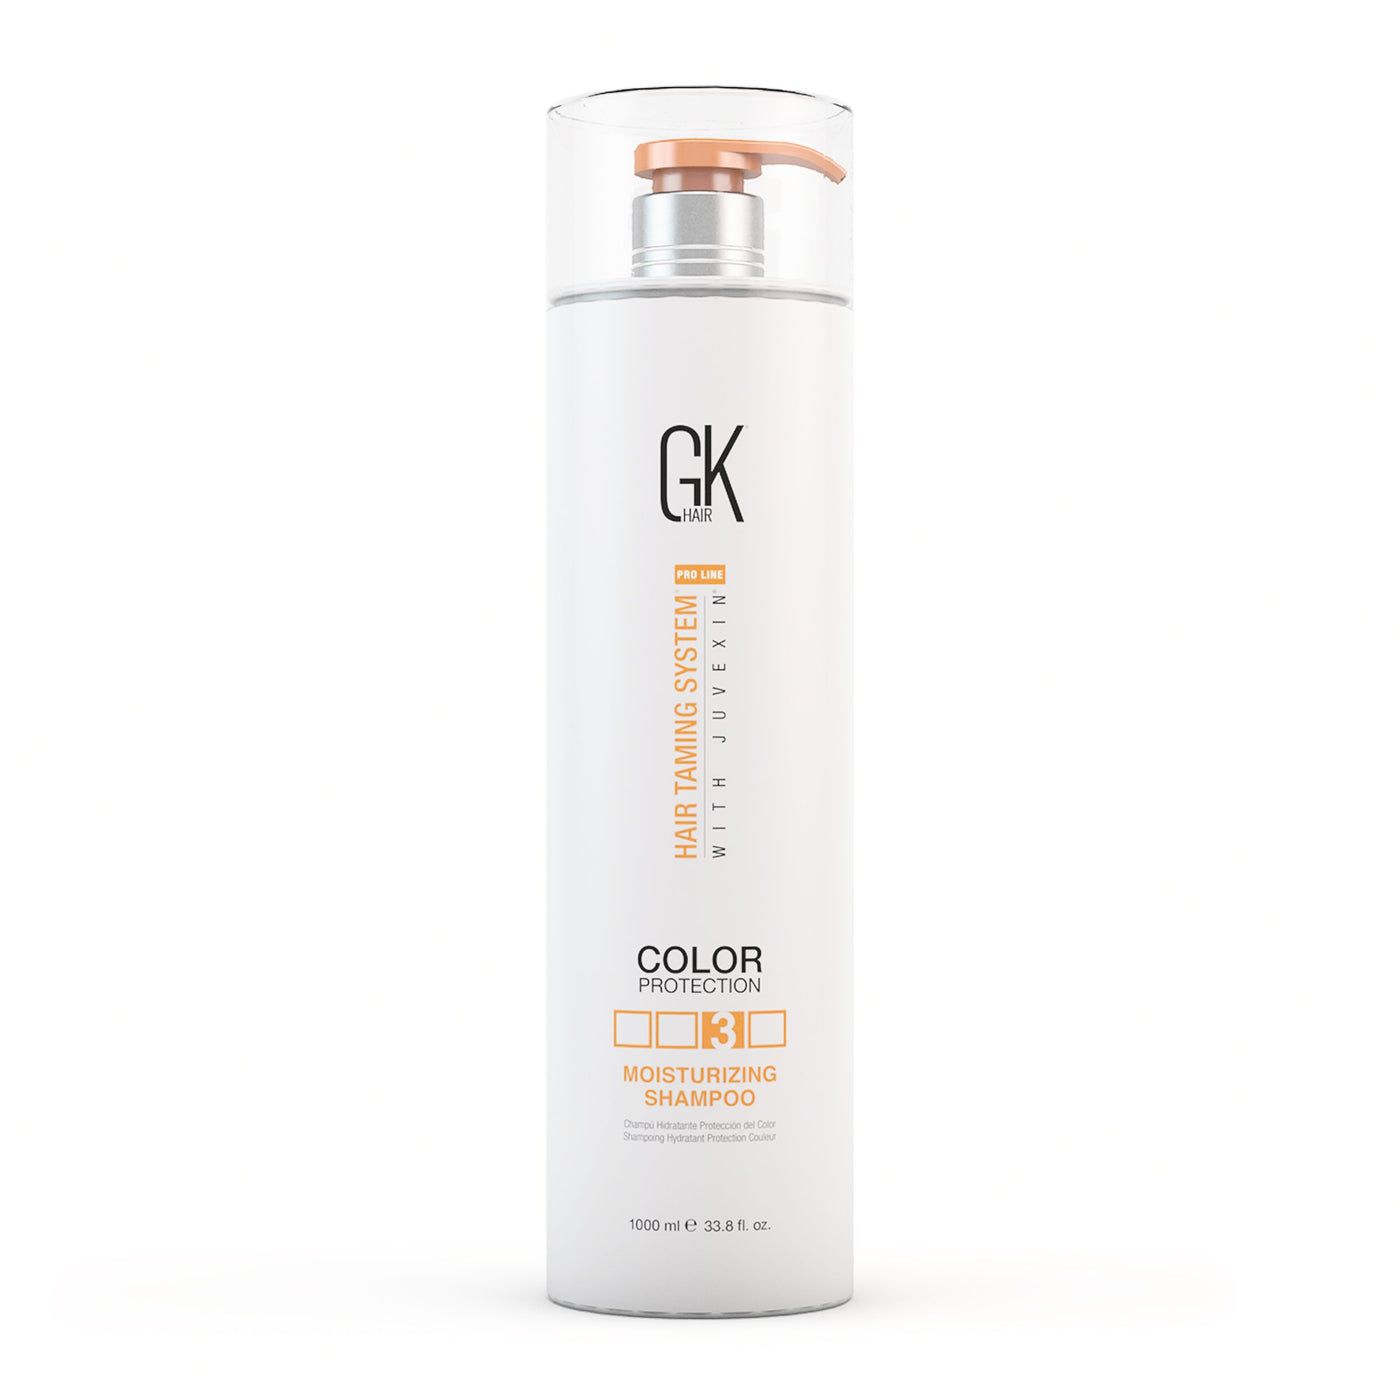 moisturizing shampoo and conditioner | GK Hair